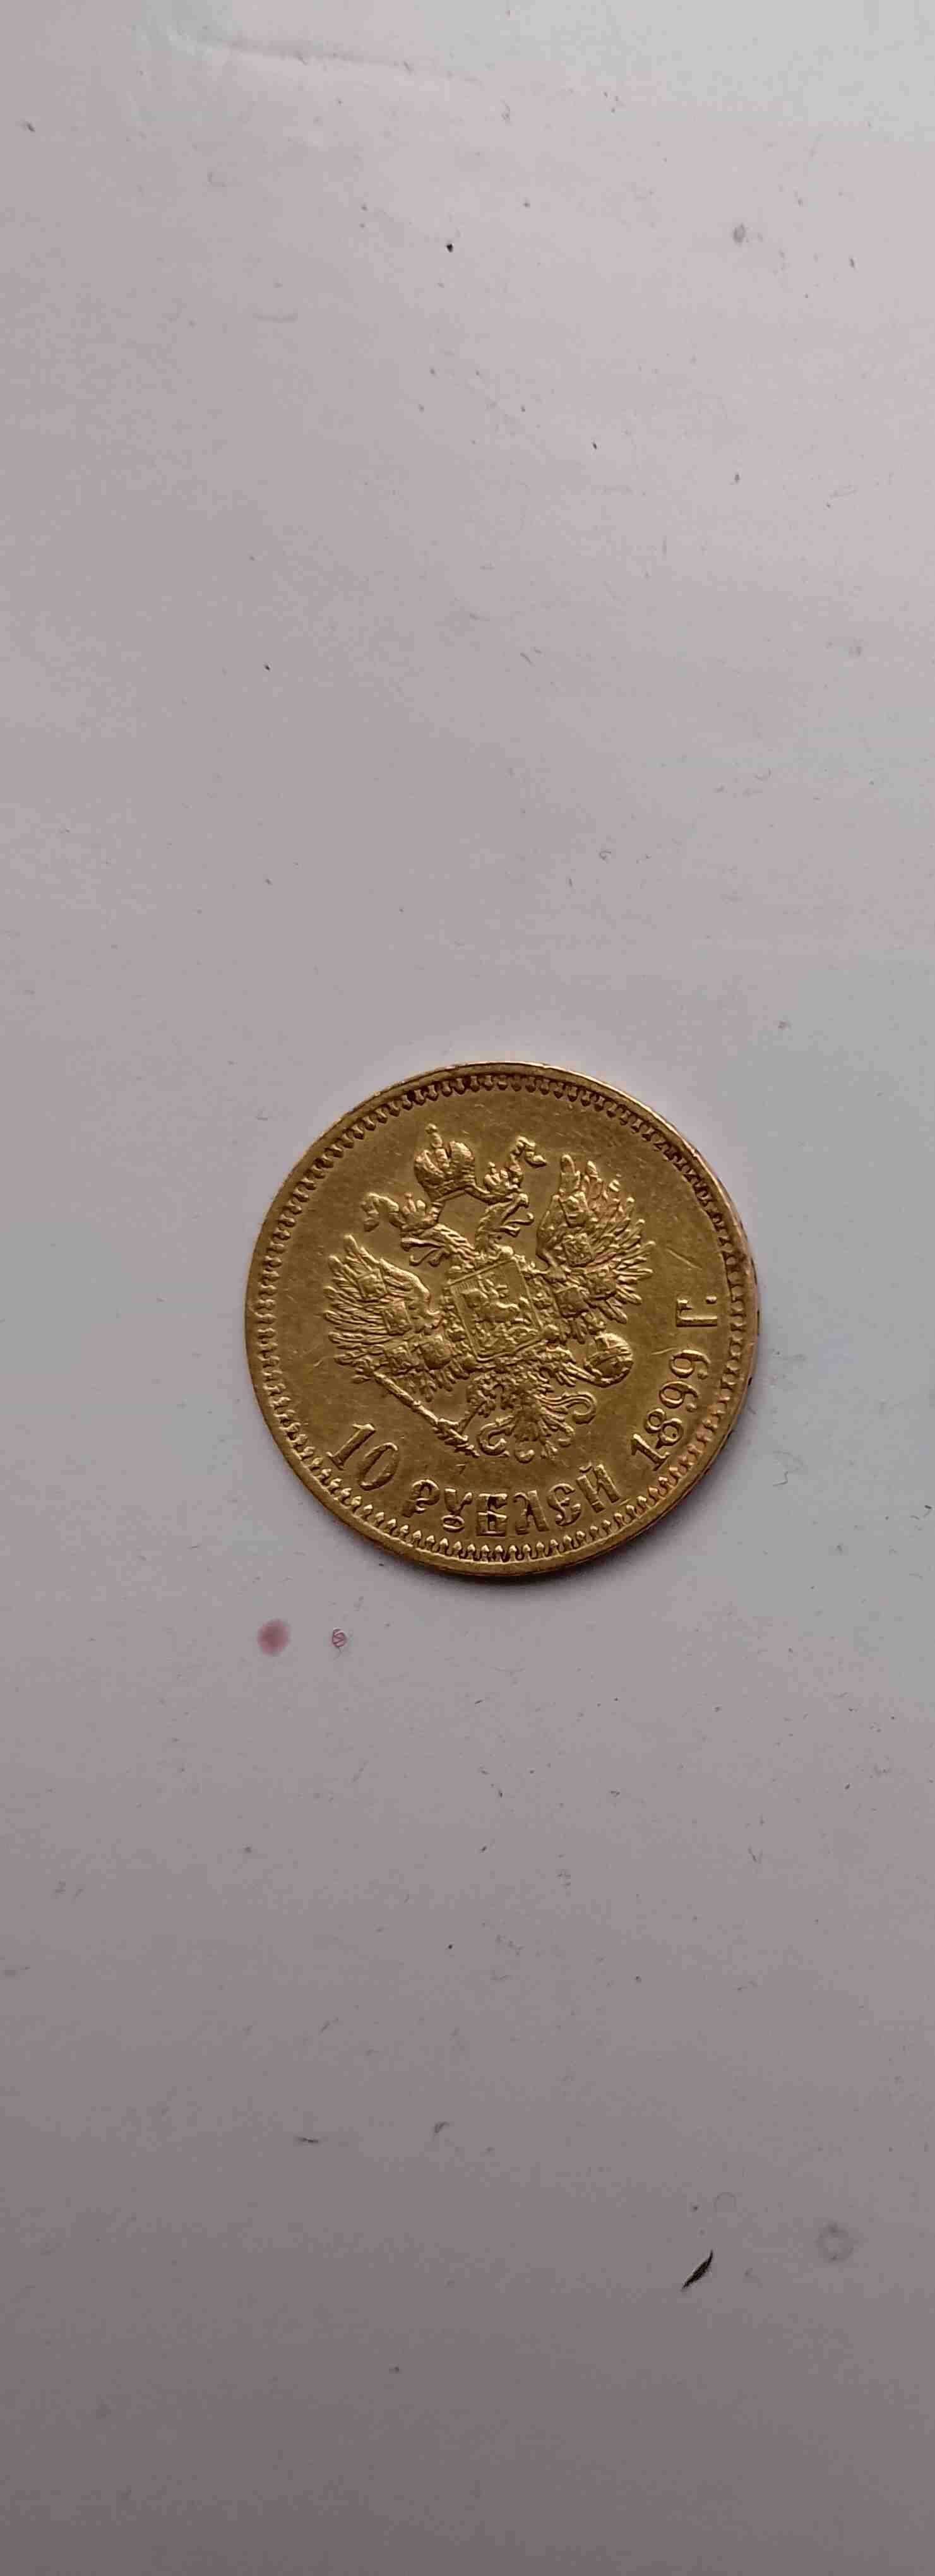 Монета золотая 10 рублей 1899 год. Николай 2